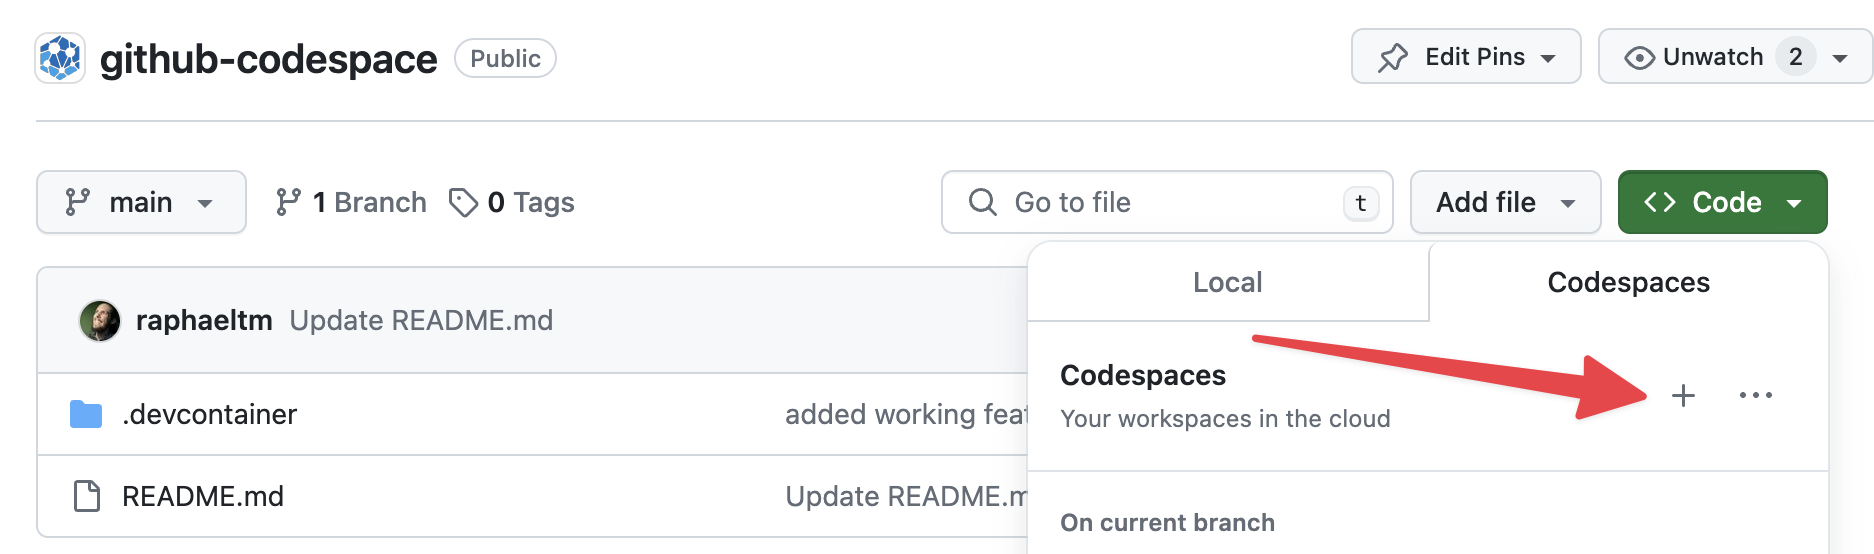 Create Codespace button screenshot